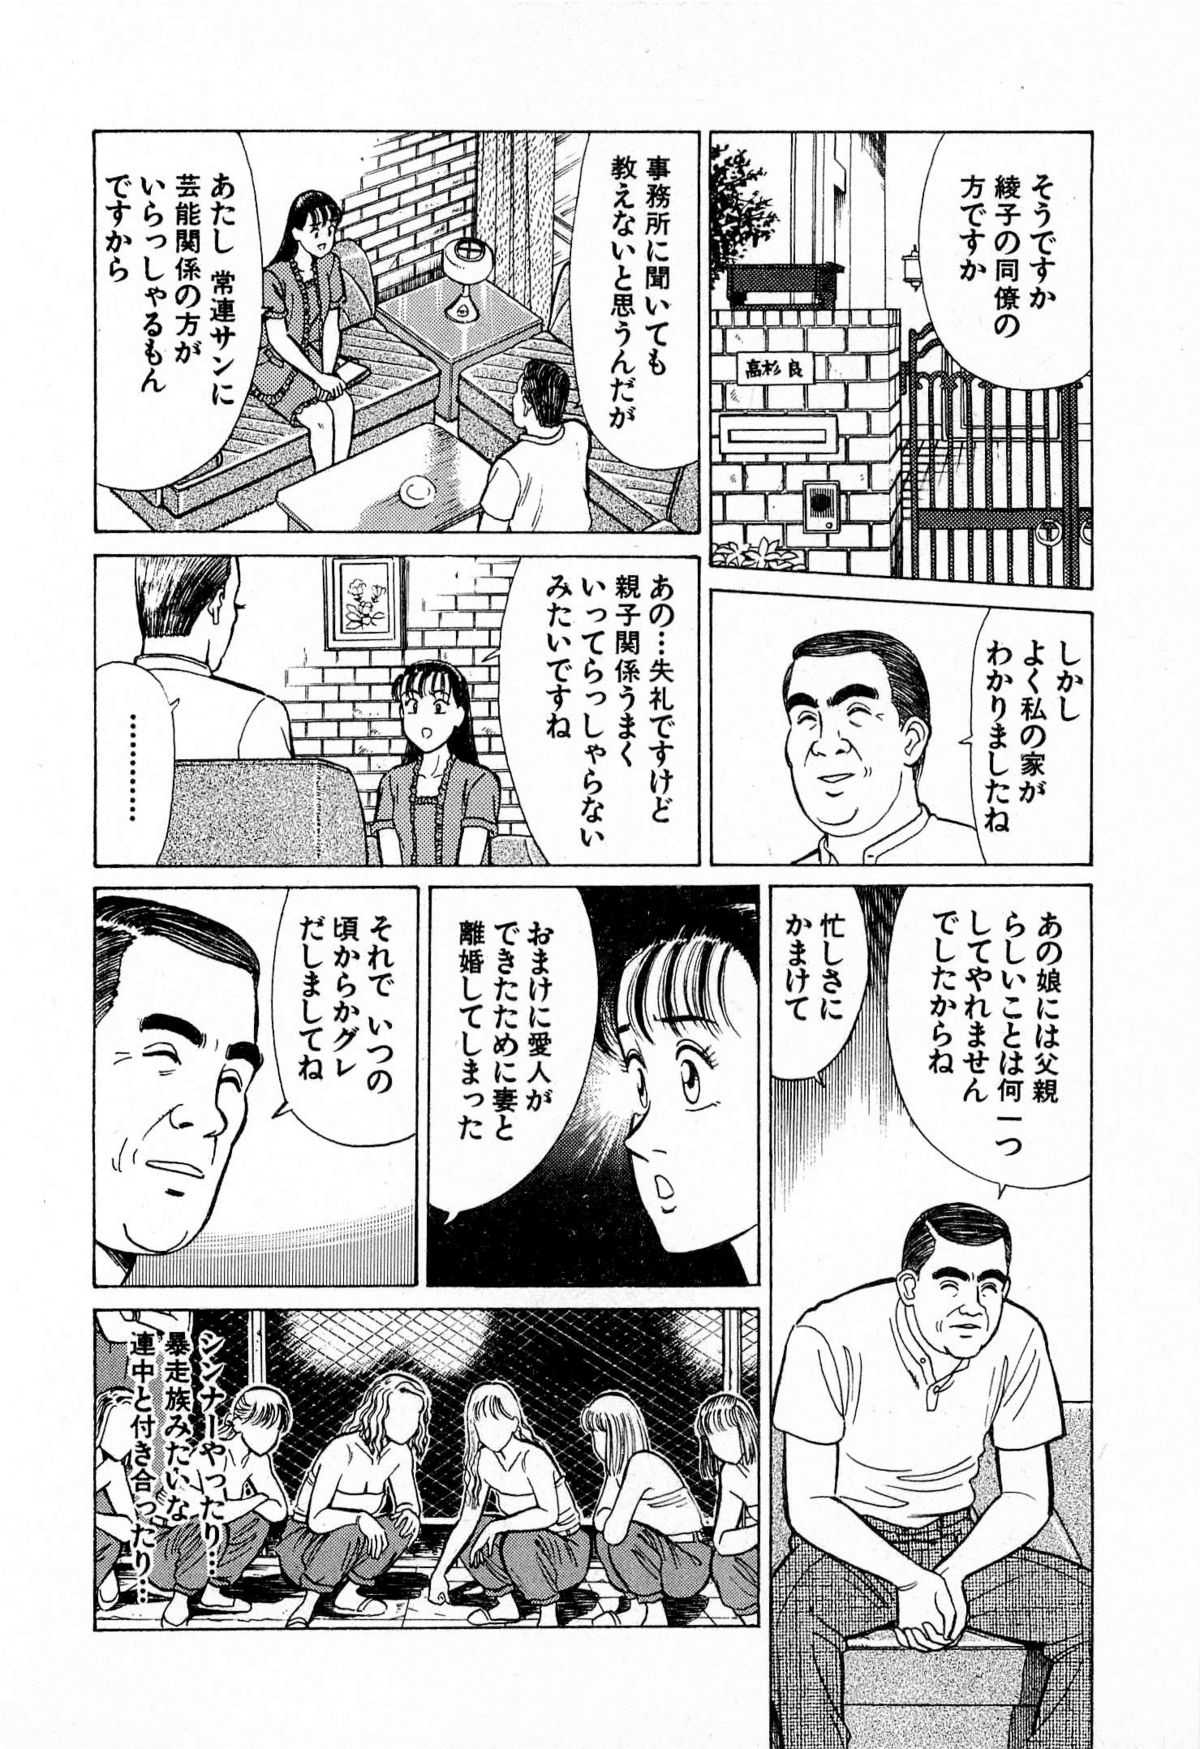 [Kusugawa Naruo] MOKO ni Omakase Vol.4 (End) [久寿川なるお] MOKOにおまかせ Vol.4 (完)